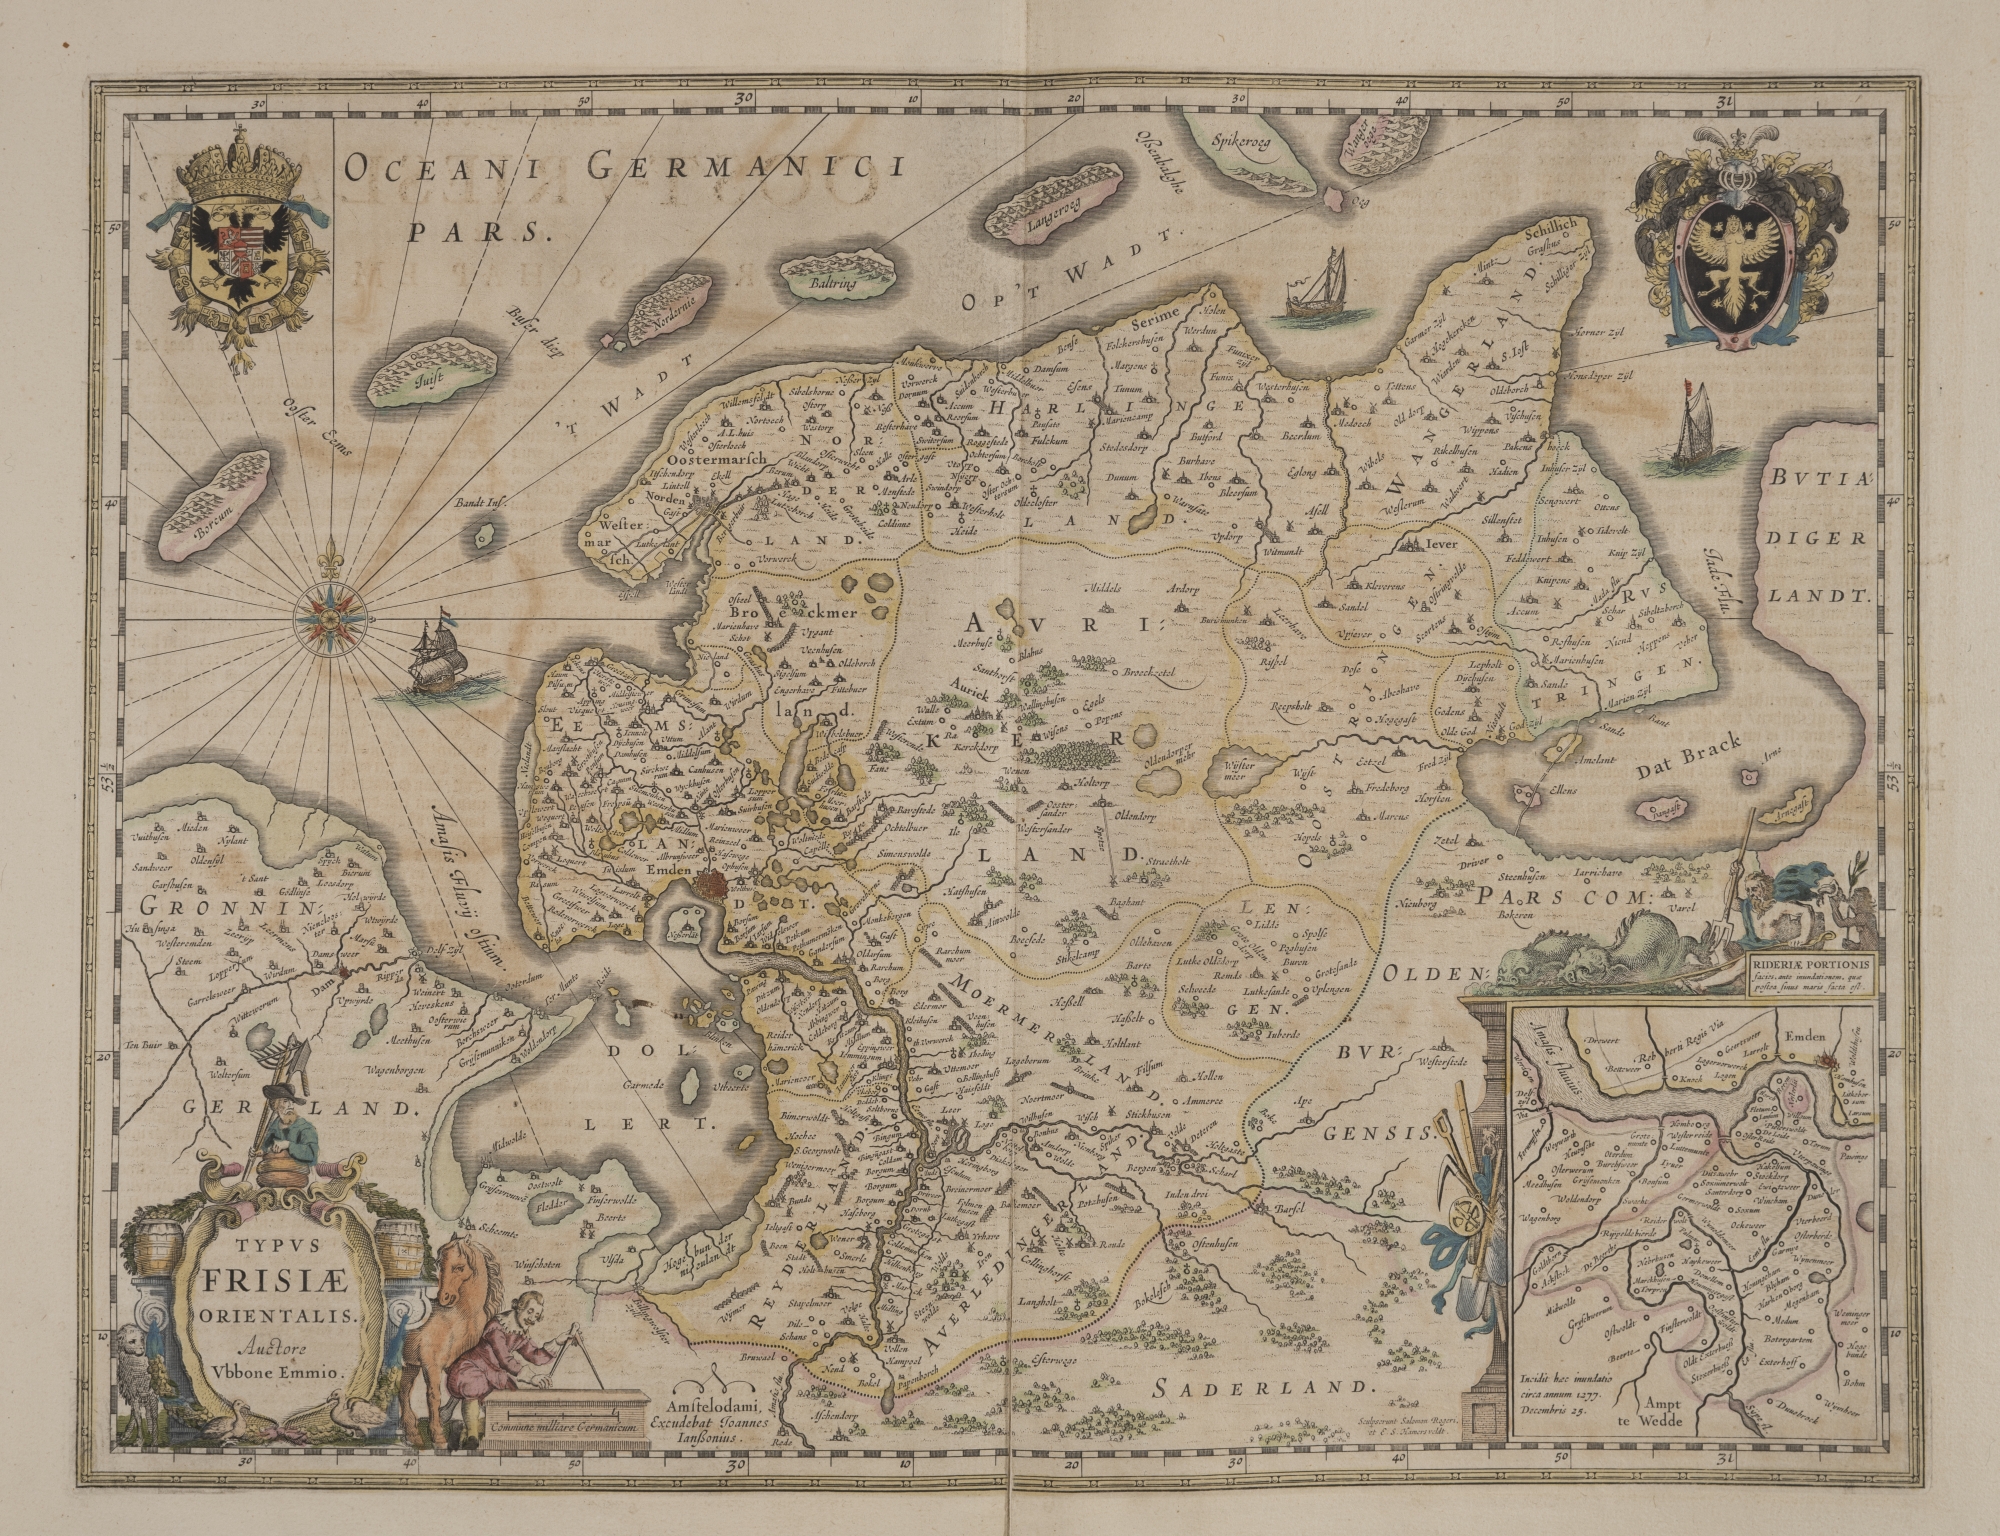 K02. Kaart van Oost-Friesland uit: Mercator, Nieuwen atlas, ofte Vverelt-beschryvinge, vertonende de voornaemste rijcken ende landen des gheheelen aerdt-bodems (Amsterdam 1647) (ex. UBG)K02. Map of East-Frisia from: Mercator, Nieuwen atlas, ofte Vverelt-beschryvinge, vertonende de voornaemste rijcken ende landen des gheheelen aerdt-bodems (Amsterdam 1647) (copy UBG)K02. Karte von Ostfriesland in: Mercator, Nieuwen atlas, ofte Vverelt-beschryvinge, vertonende de voornaemste rijcken ende landen des gheheelen aerdt-bodems (Amsterdam 1647) (Exemplar UBG)